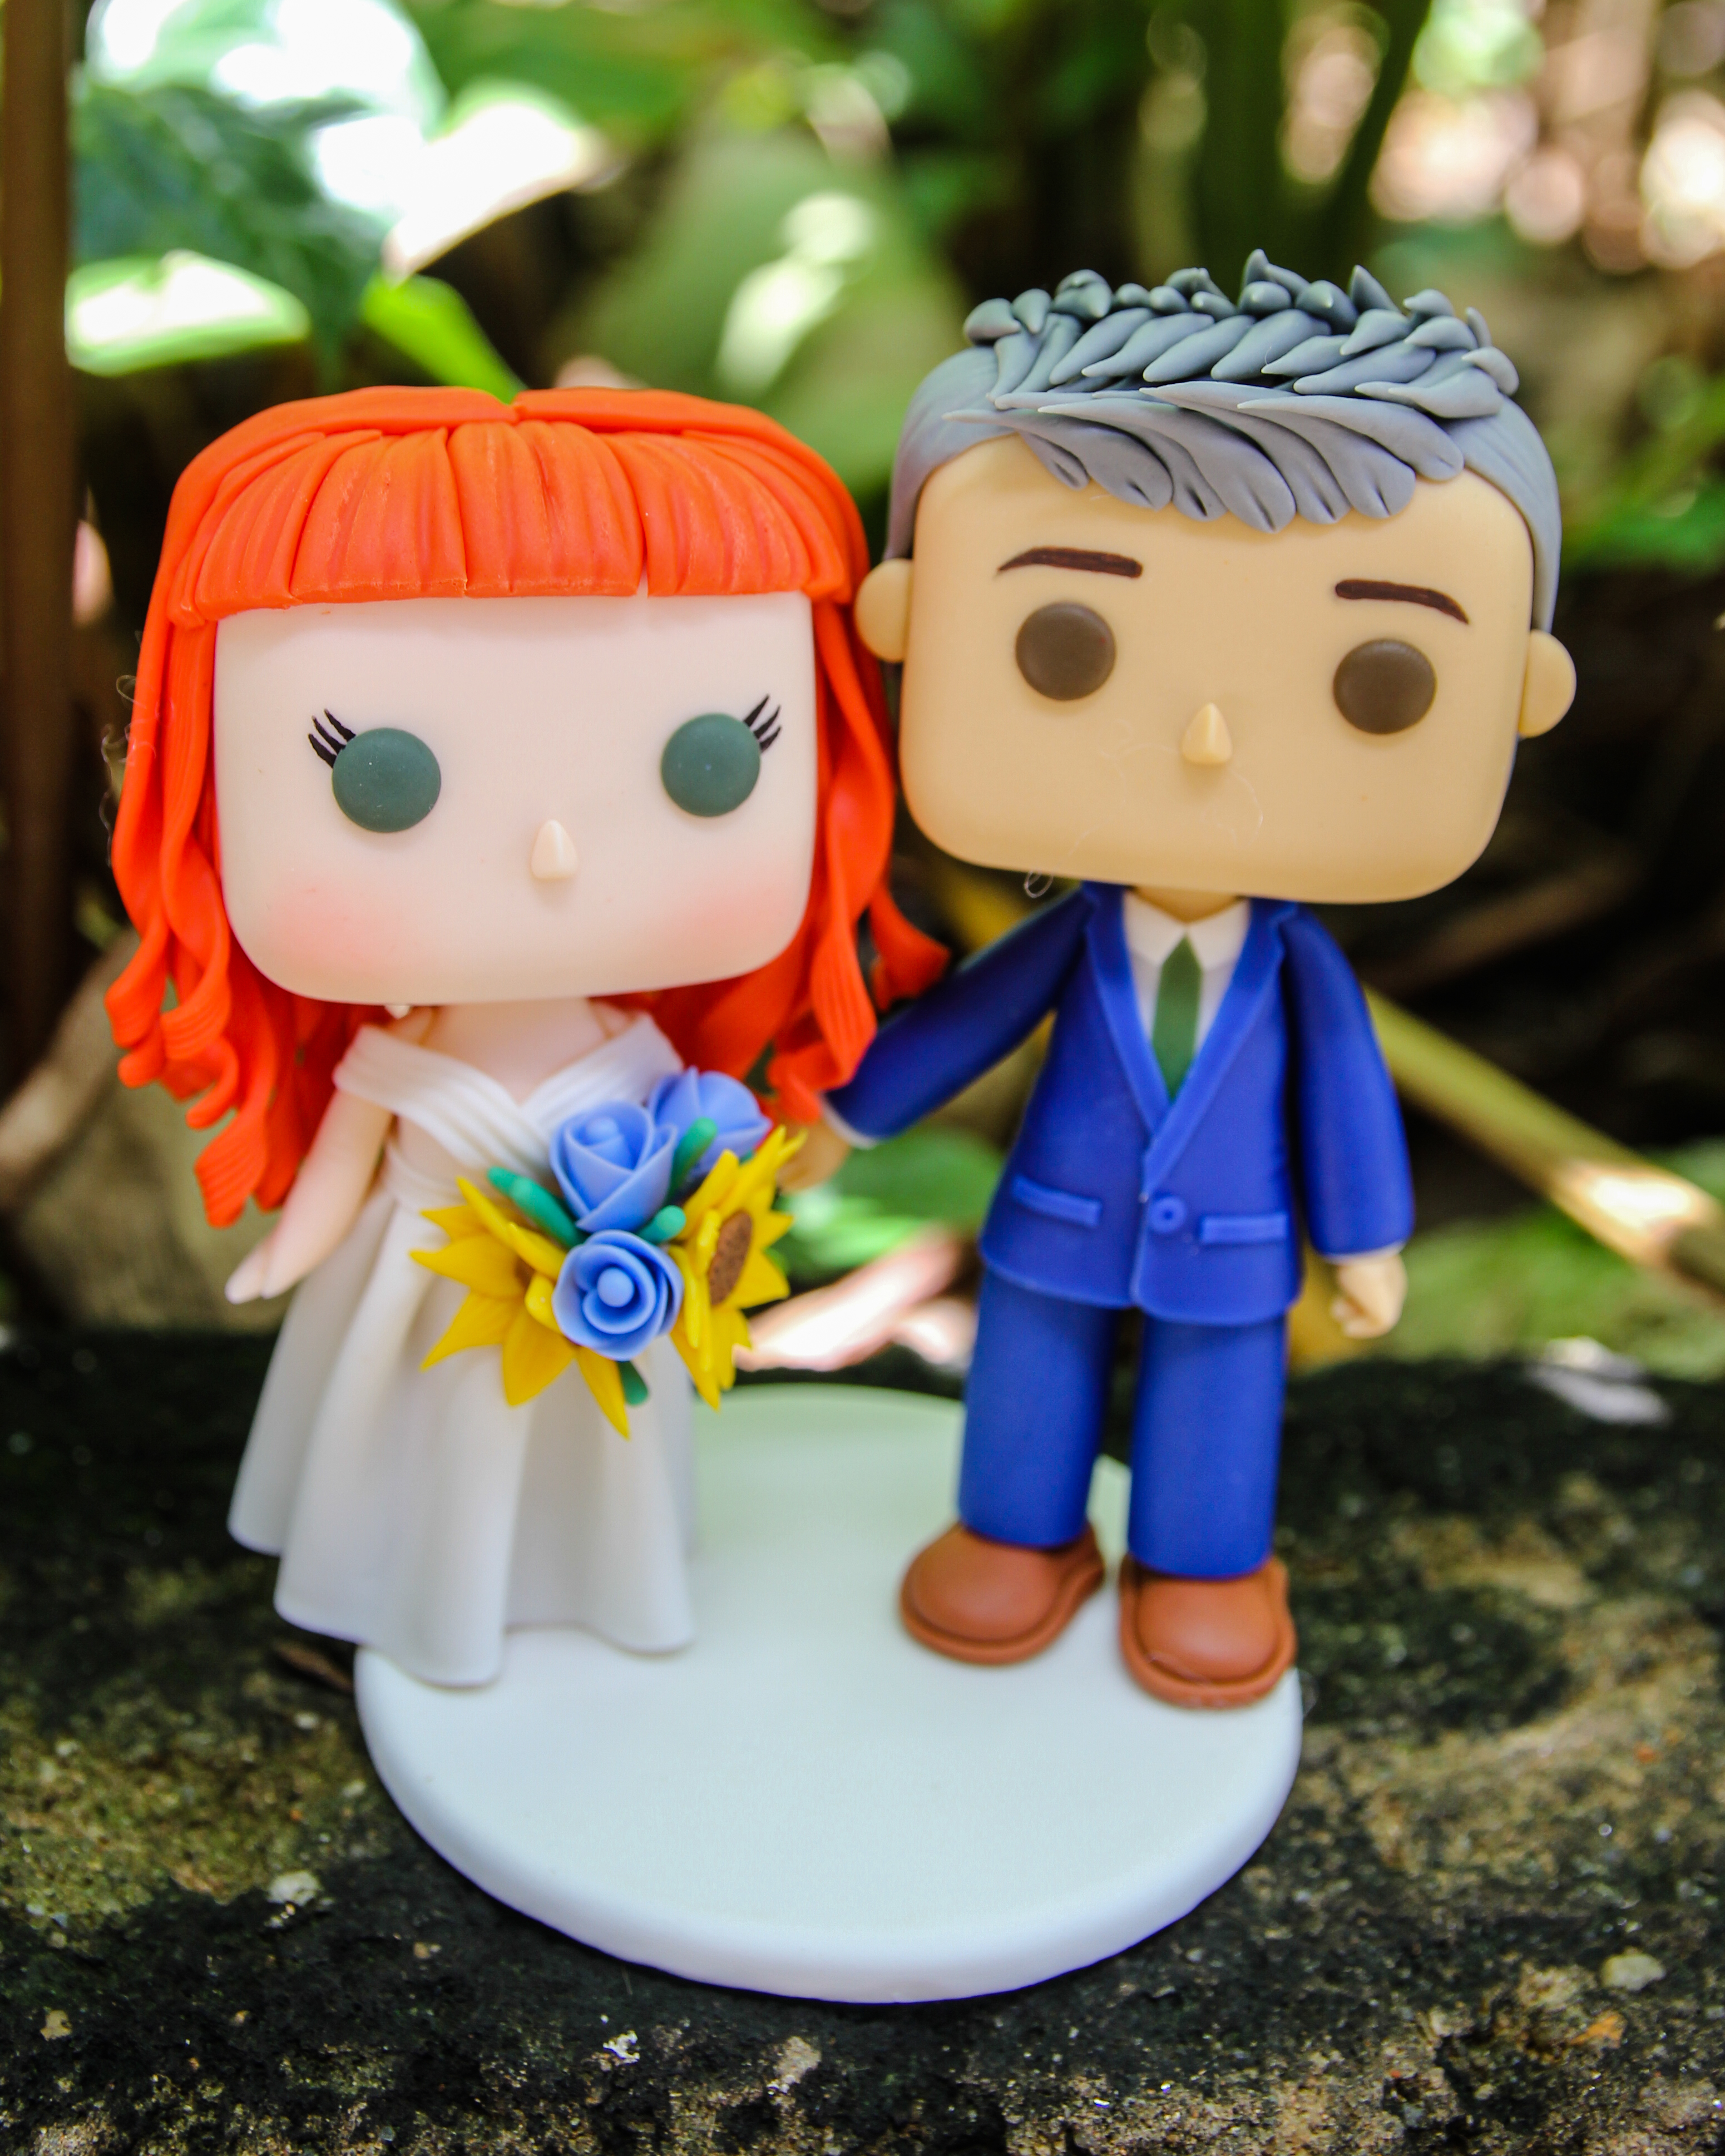 Custom Funko Pop Wedding Cake Topper, Gray-Haired Groom and Orange-Haired Bride Wedding Cake Topper